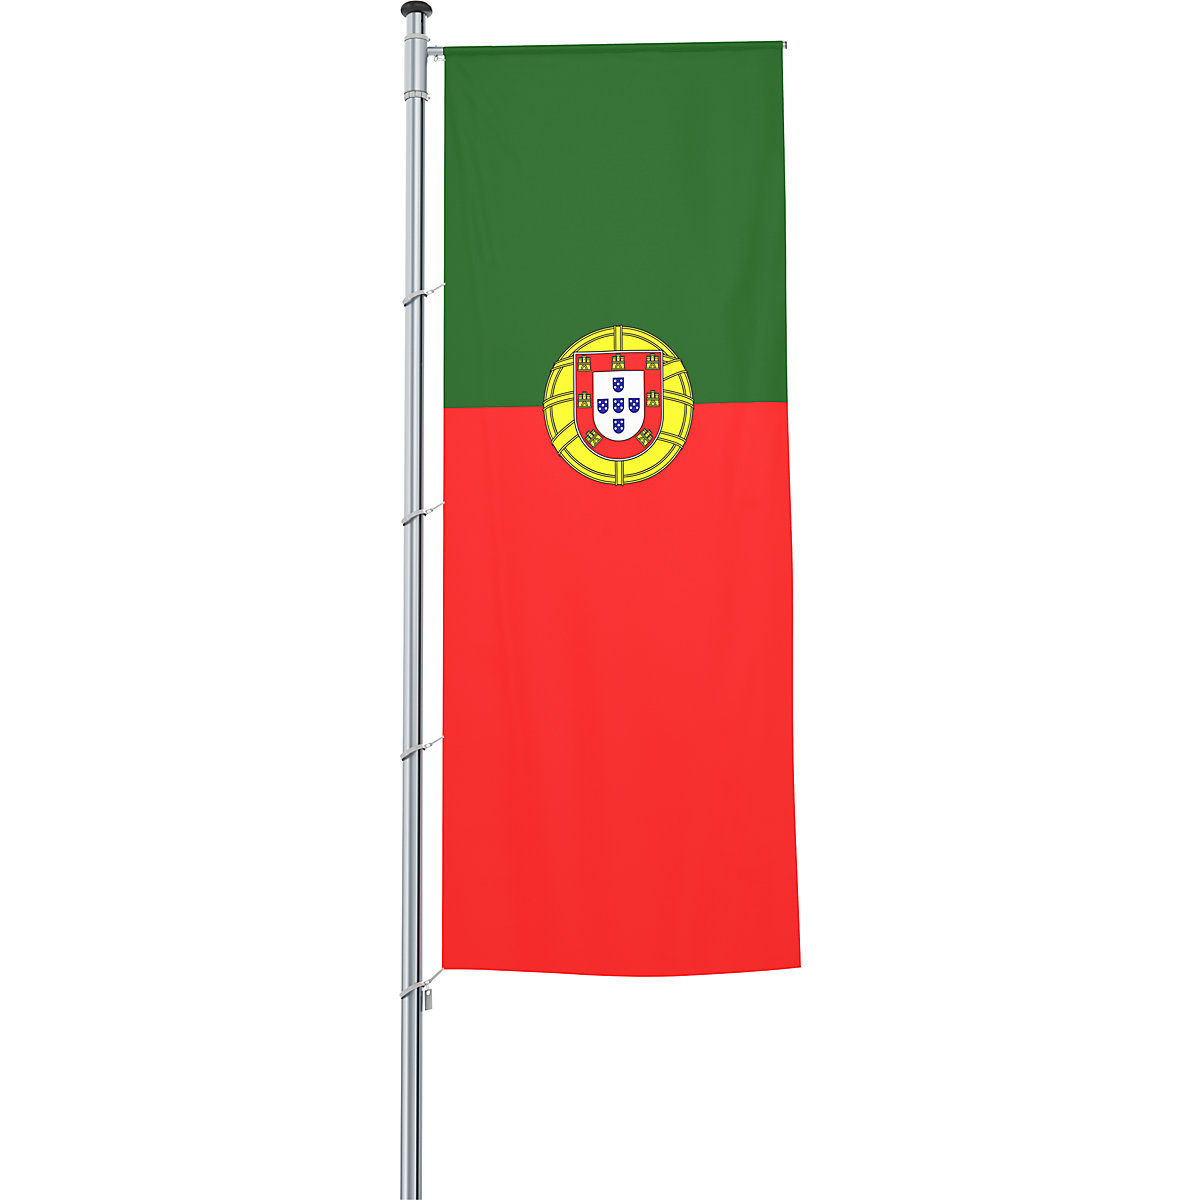 Mastvlag/landvlag – Mannus, formaat 1,2 x 3 m, Portugal-5